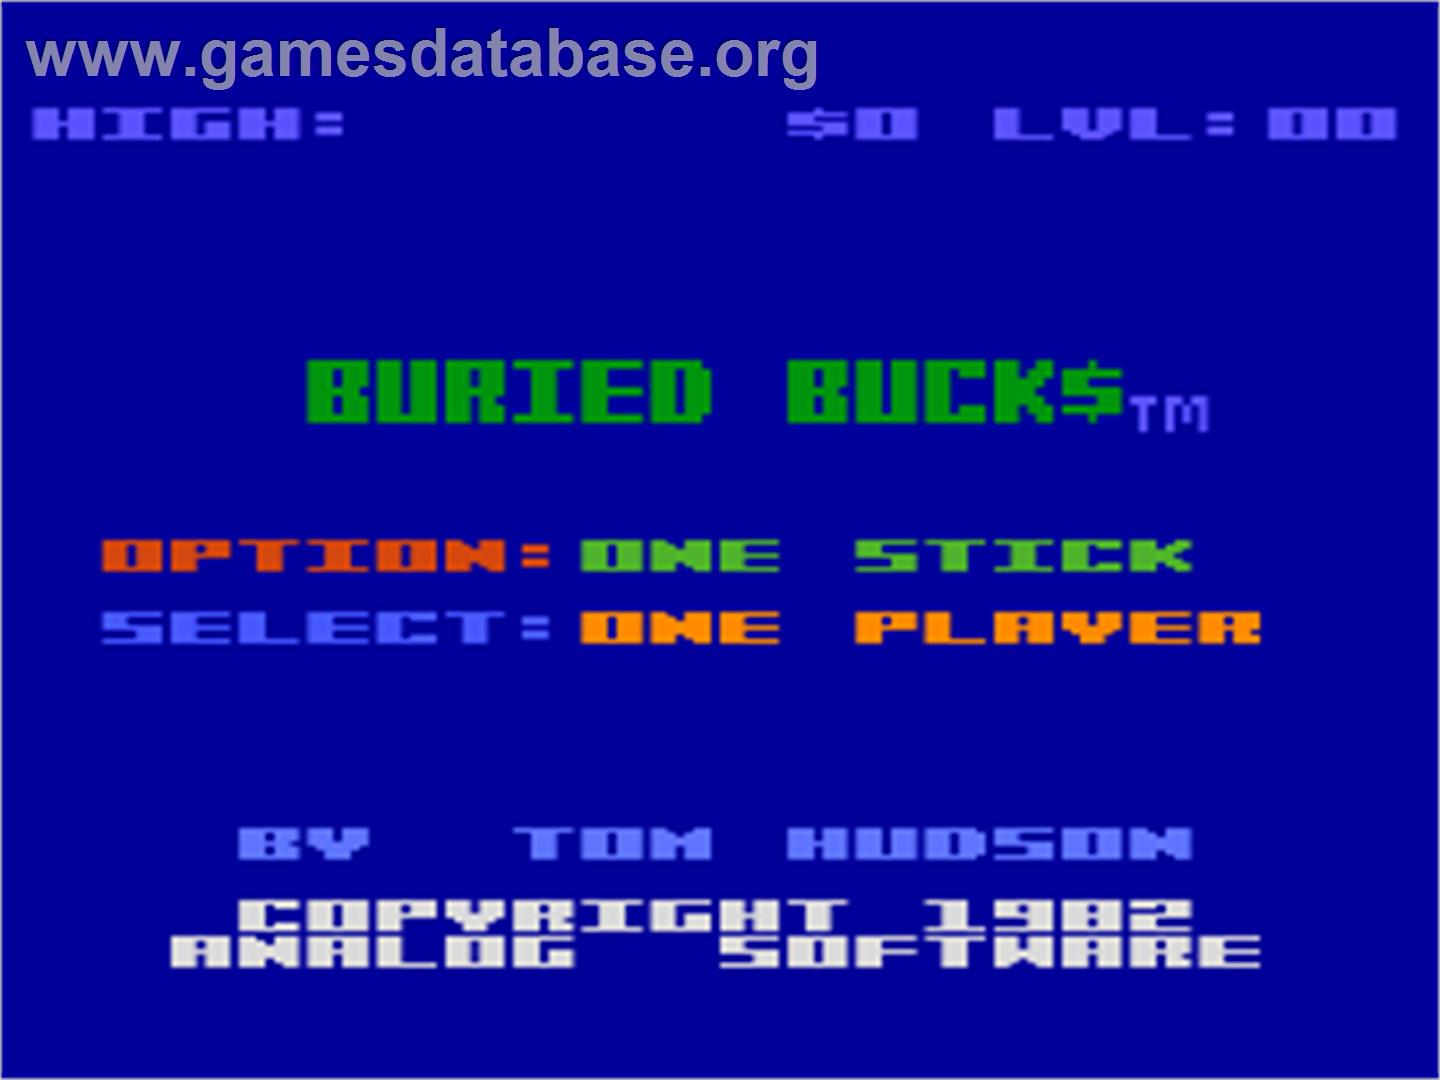 Buried Buck$ - Atari 8-bit - Artwork - Title Screen